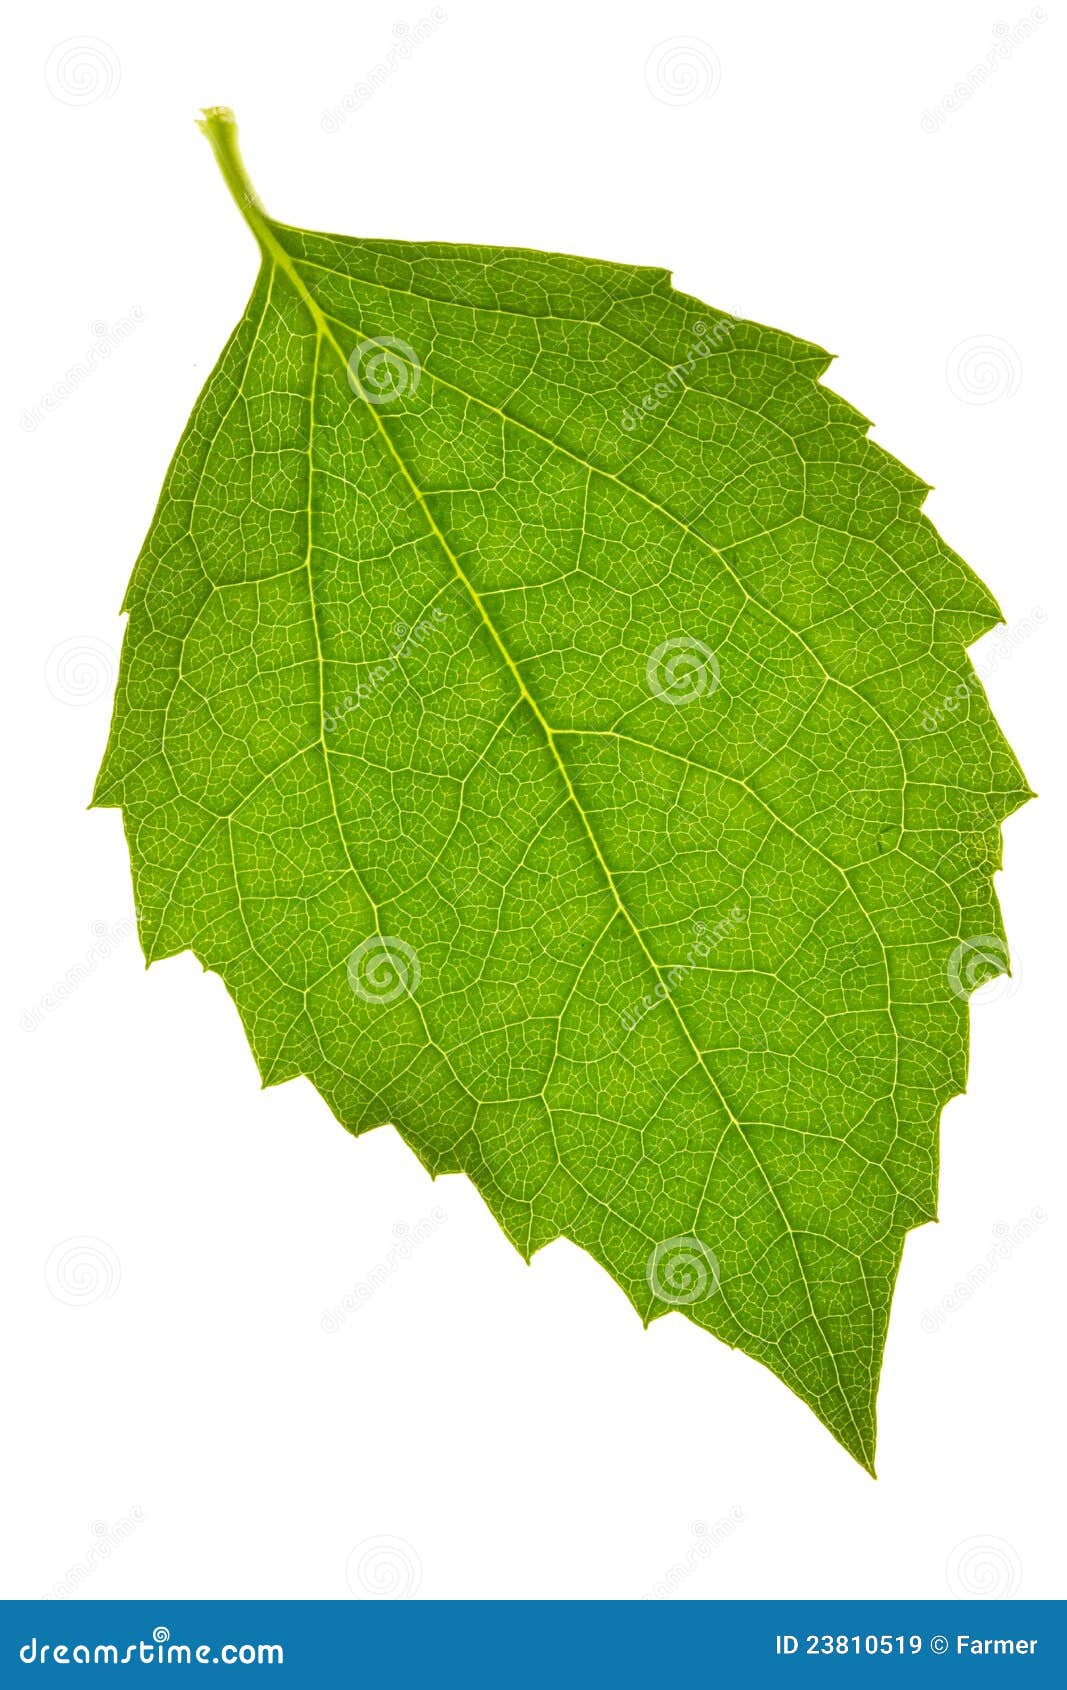 Jasmine leaf stock image. Image of element, floral, season - 23810519